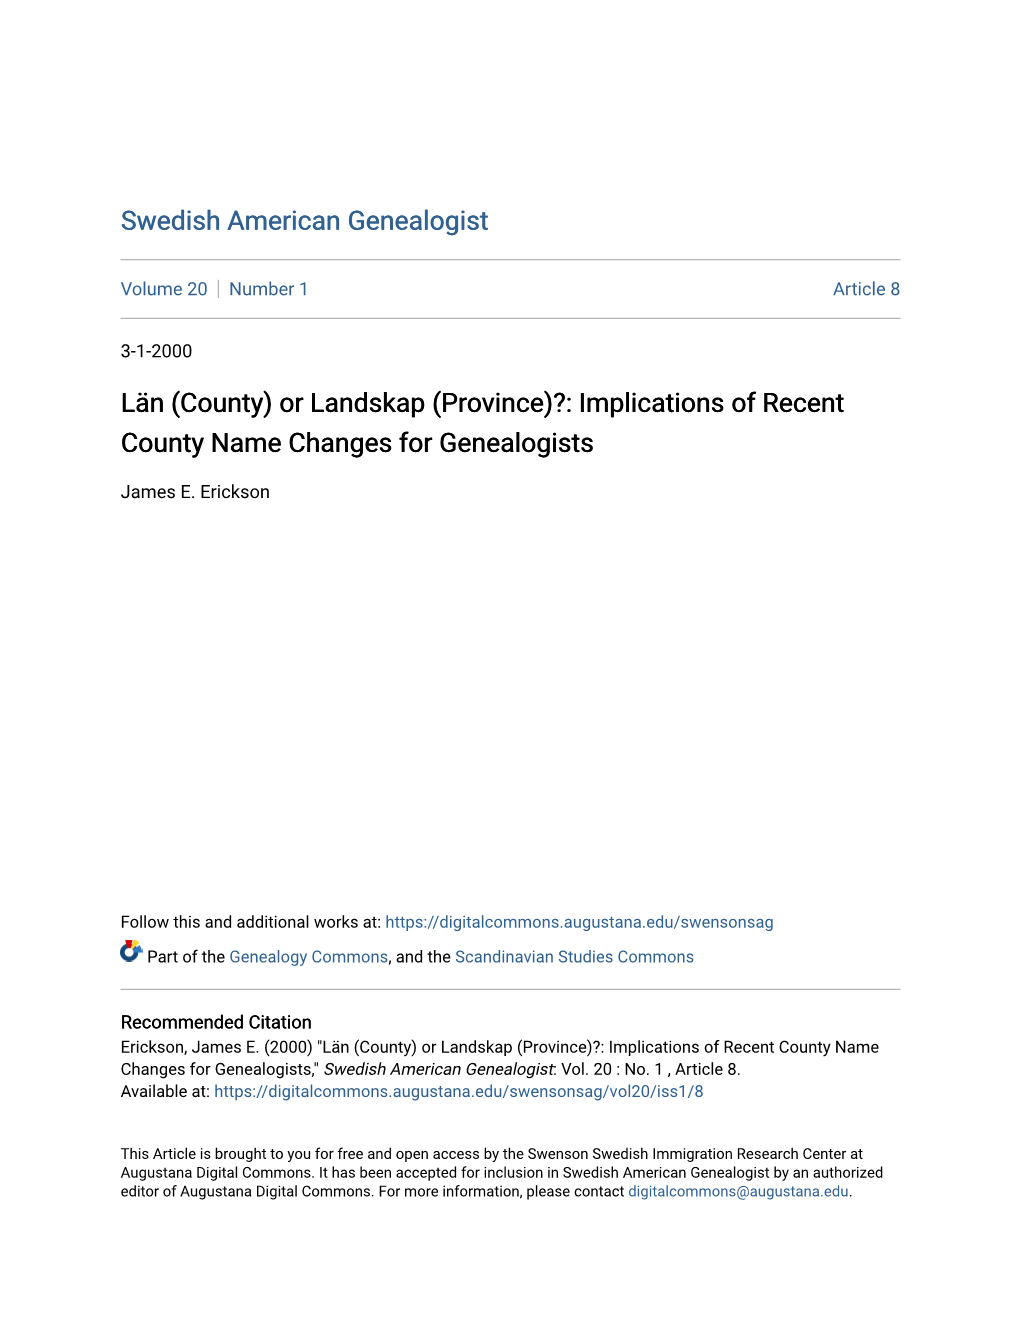 Or Landskap (Province)?: Implications of Recent County Name Changes for Genealogists